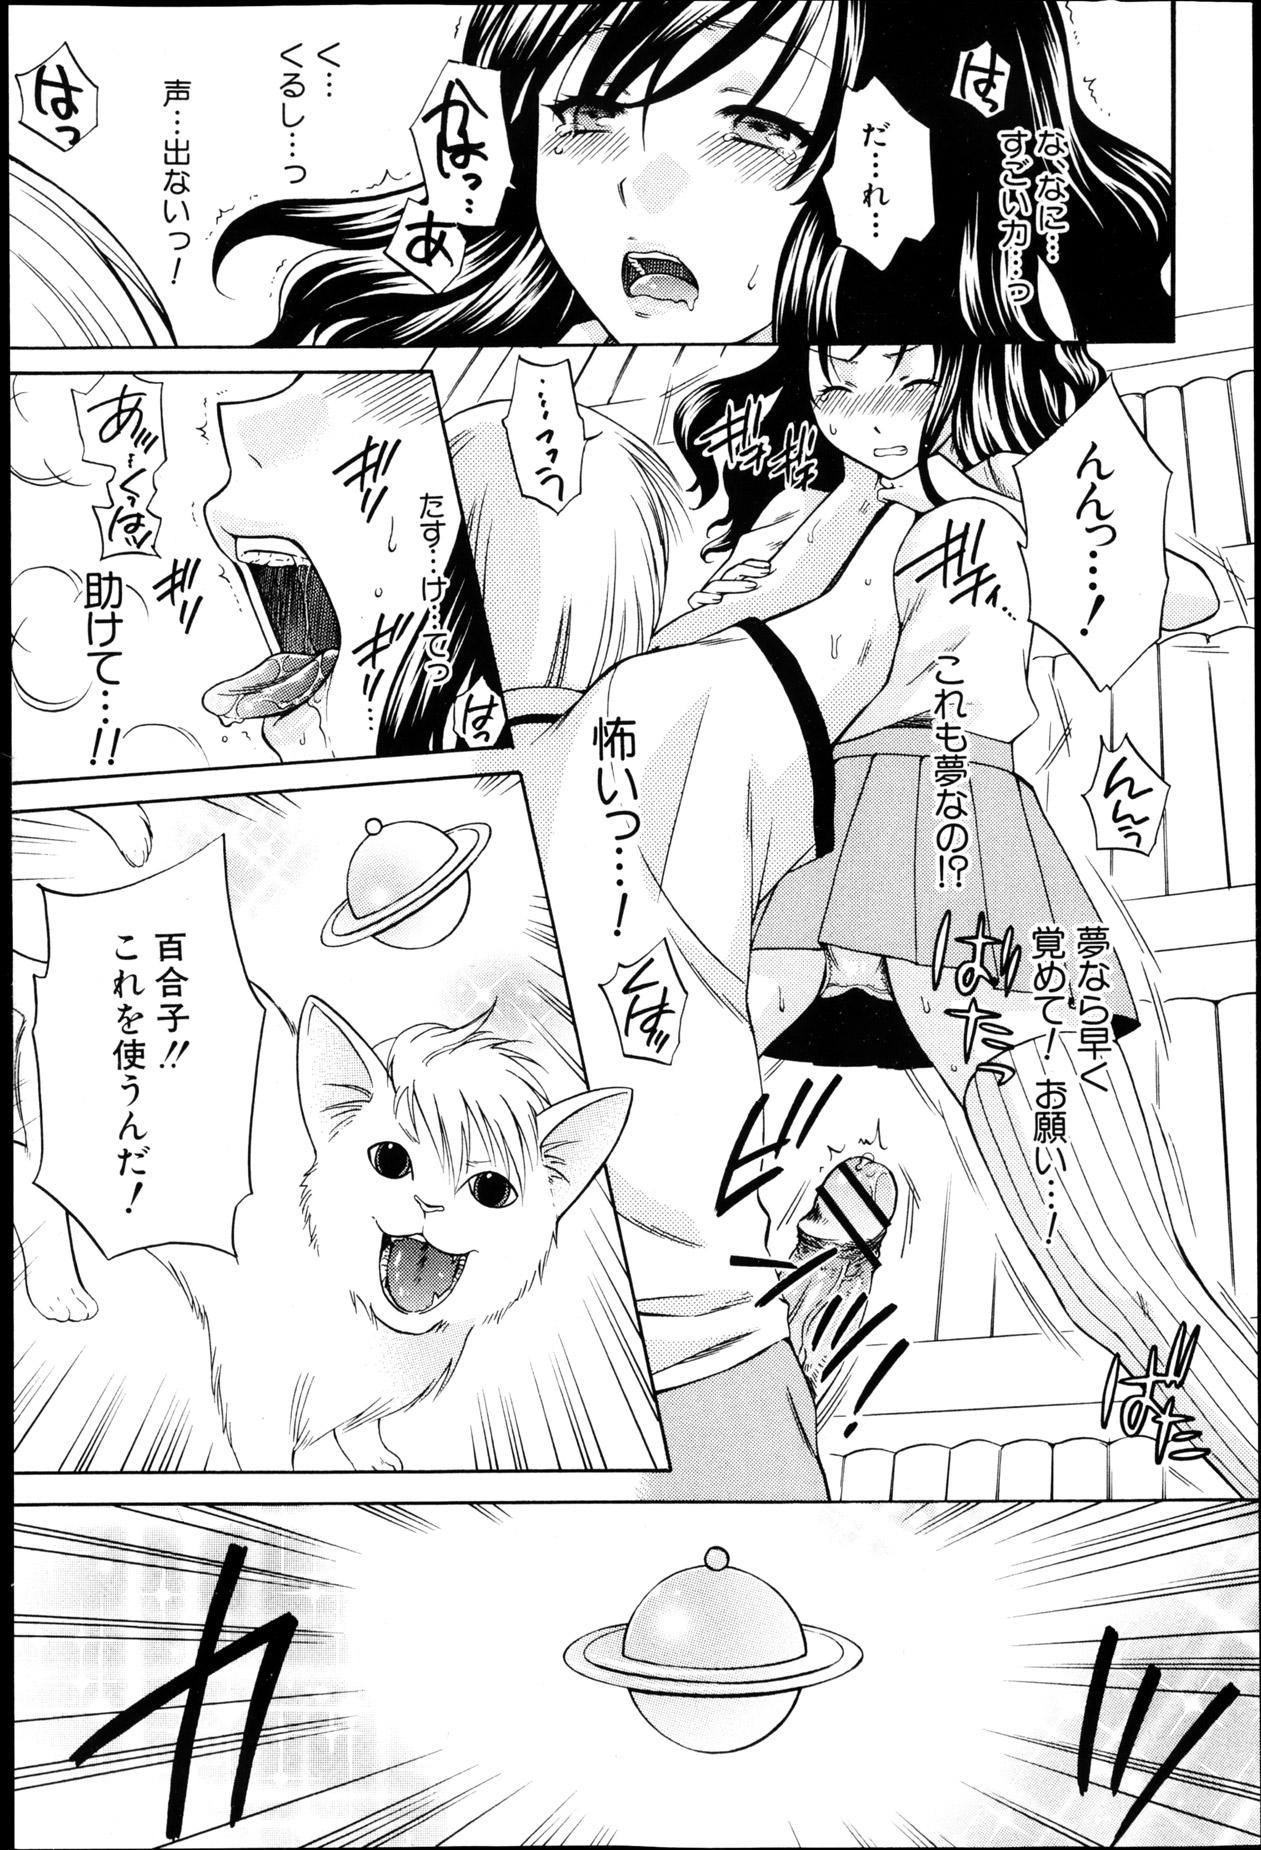 Seduction Yoru ga Akenai. Freaky - Page 11